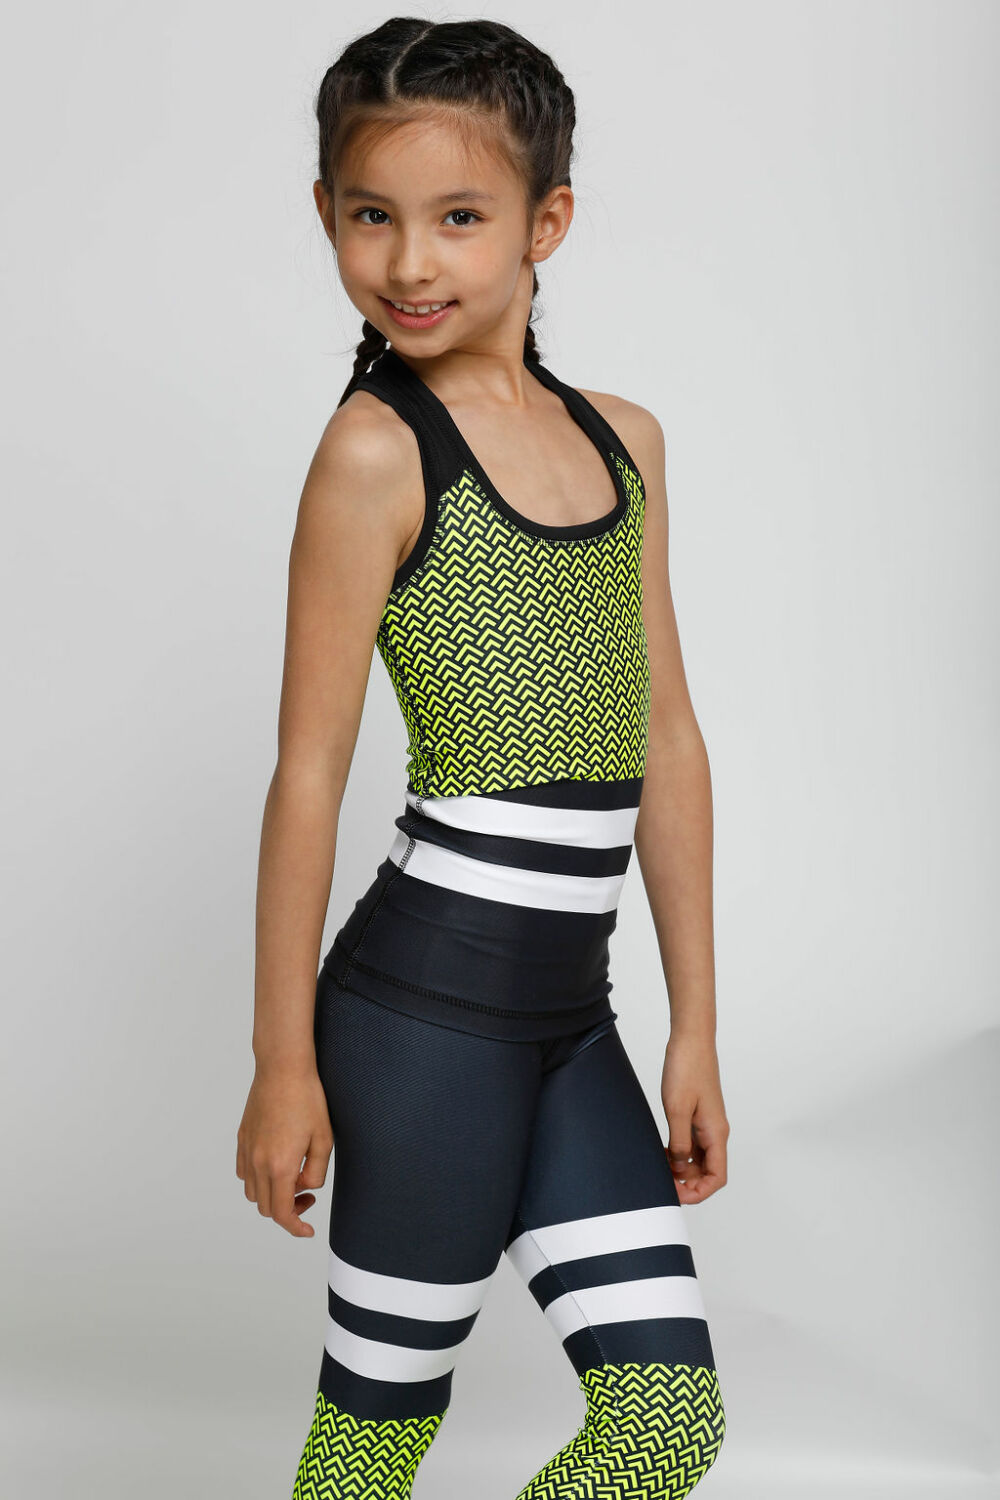 Indigo Fitness Style – Kids Scaly neon fitness leggings